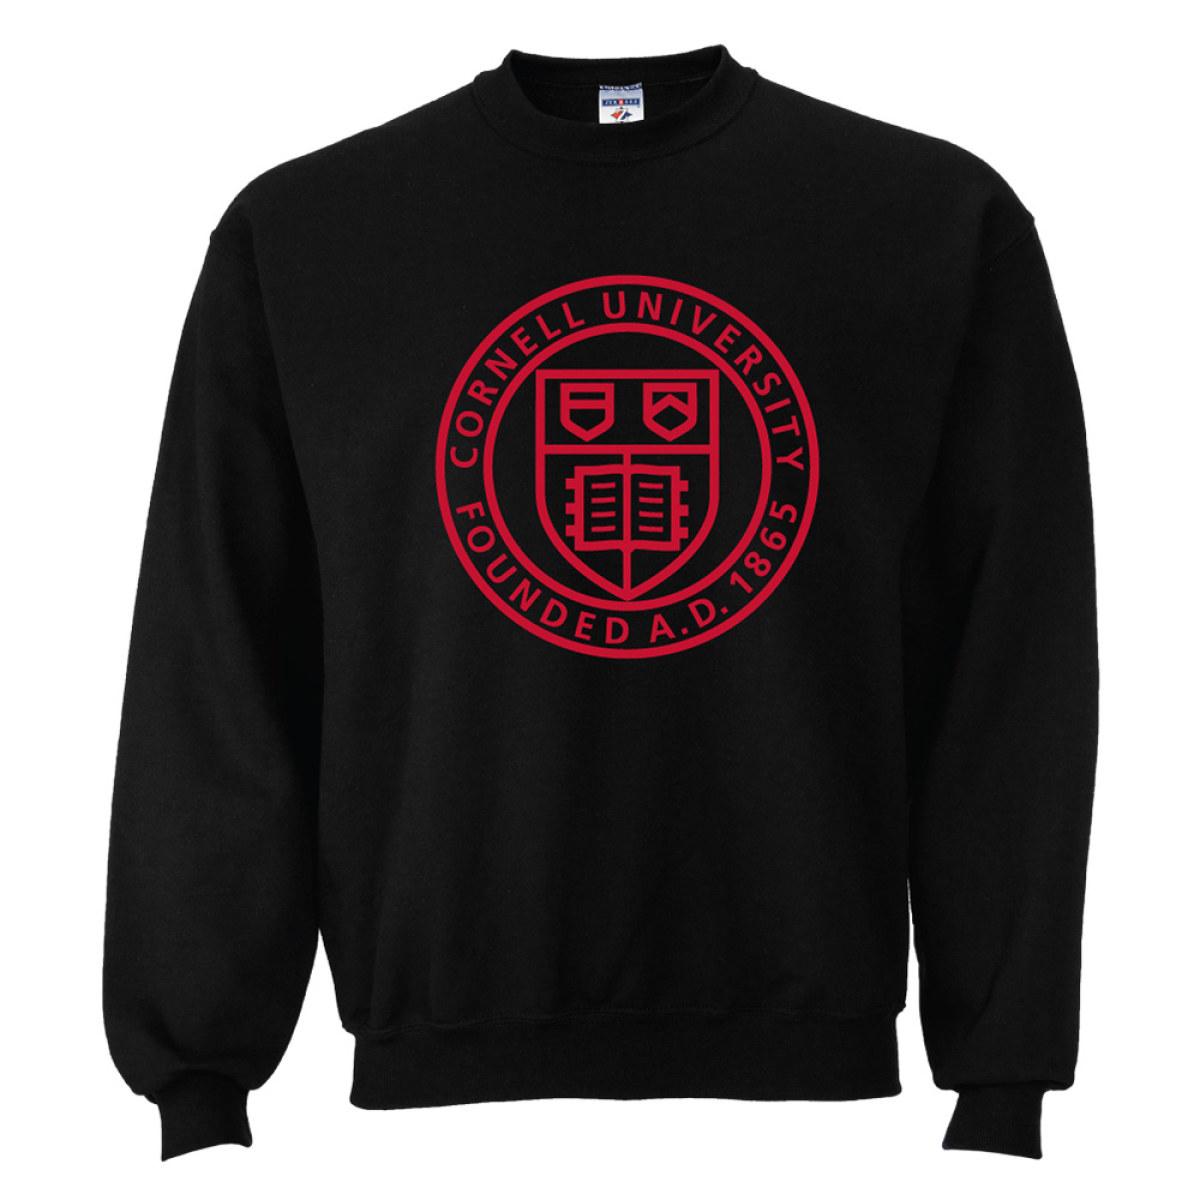 Sweatshirt with Large Cornell Black